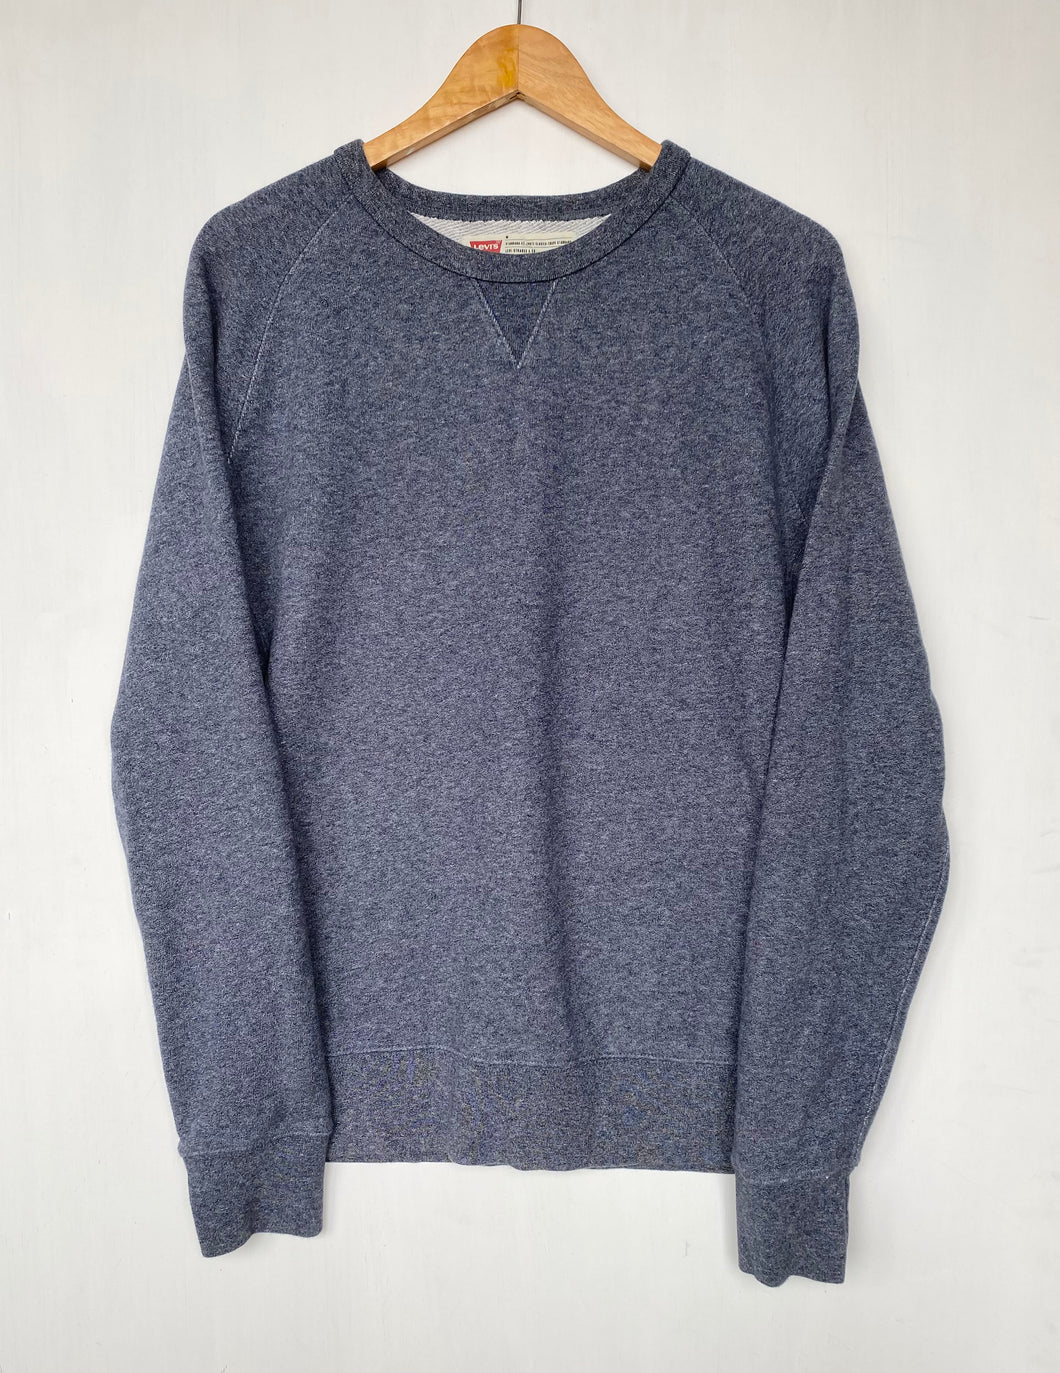 Levi’s sweatshirt (M)